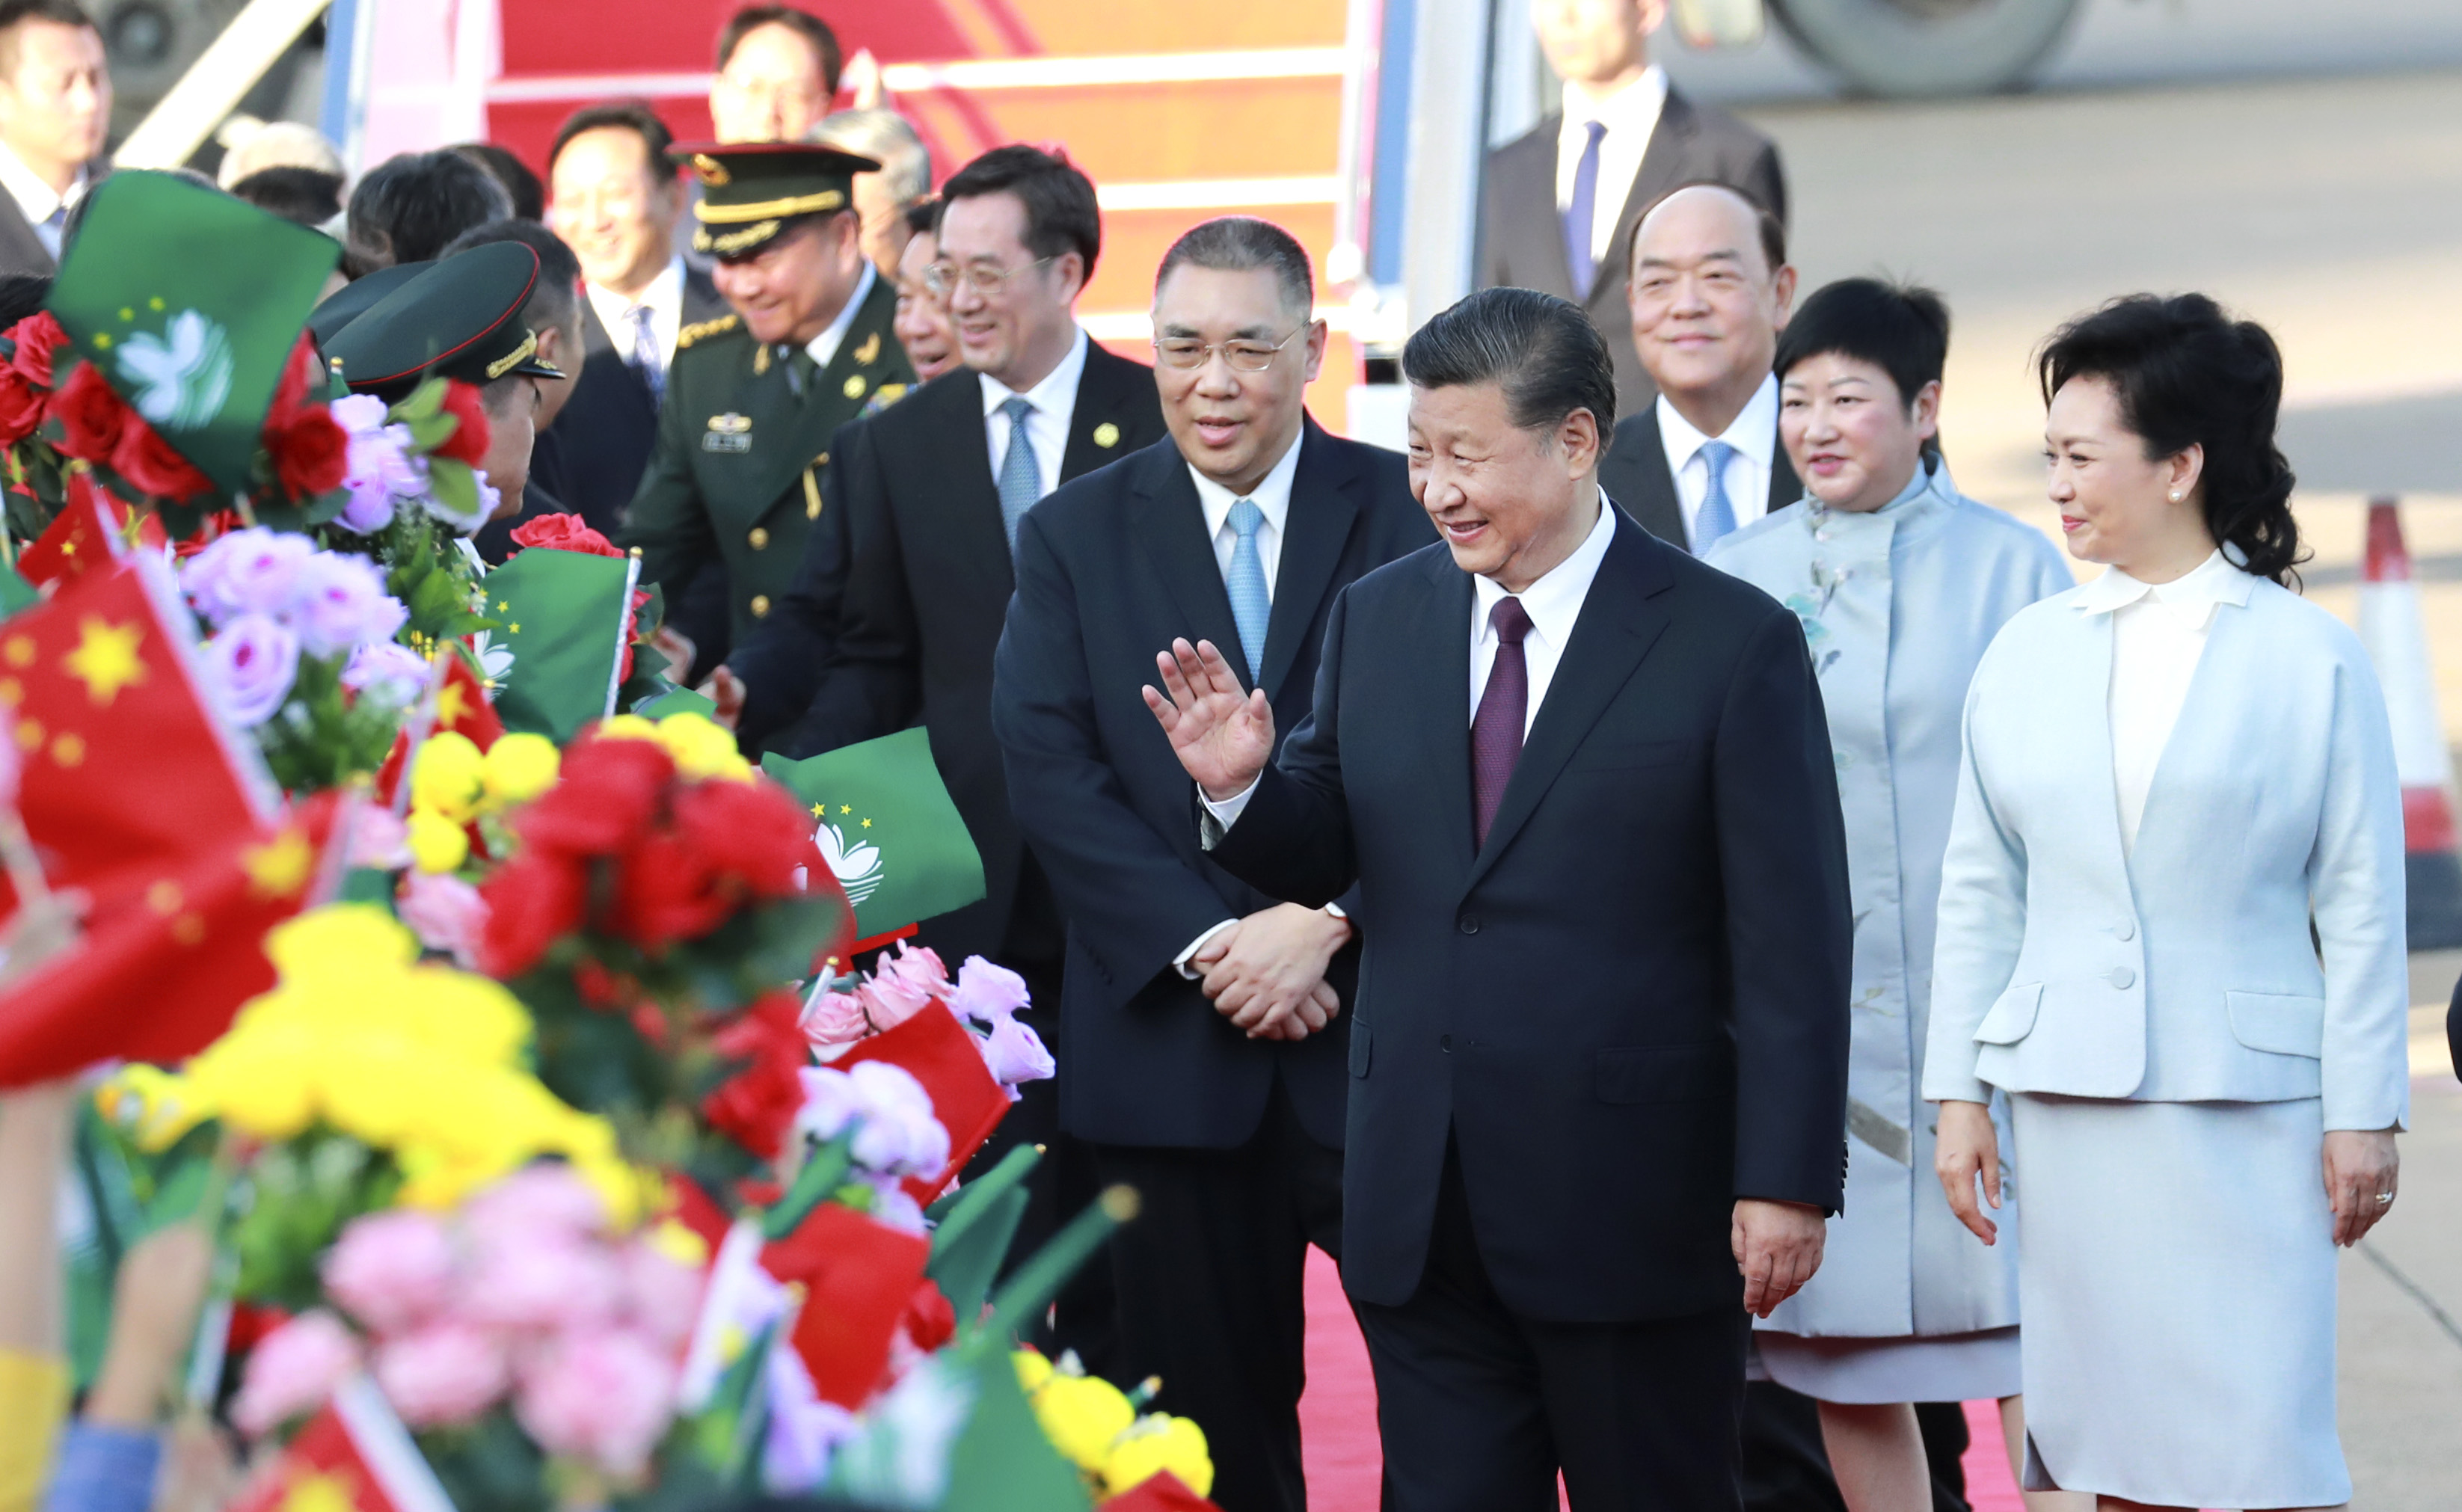 Xi says nation is proud of Macau’s achievements, progress